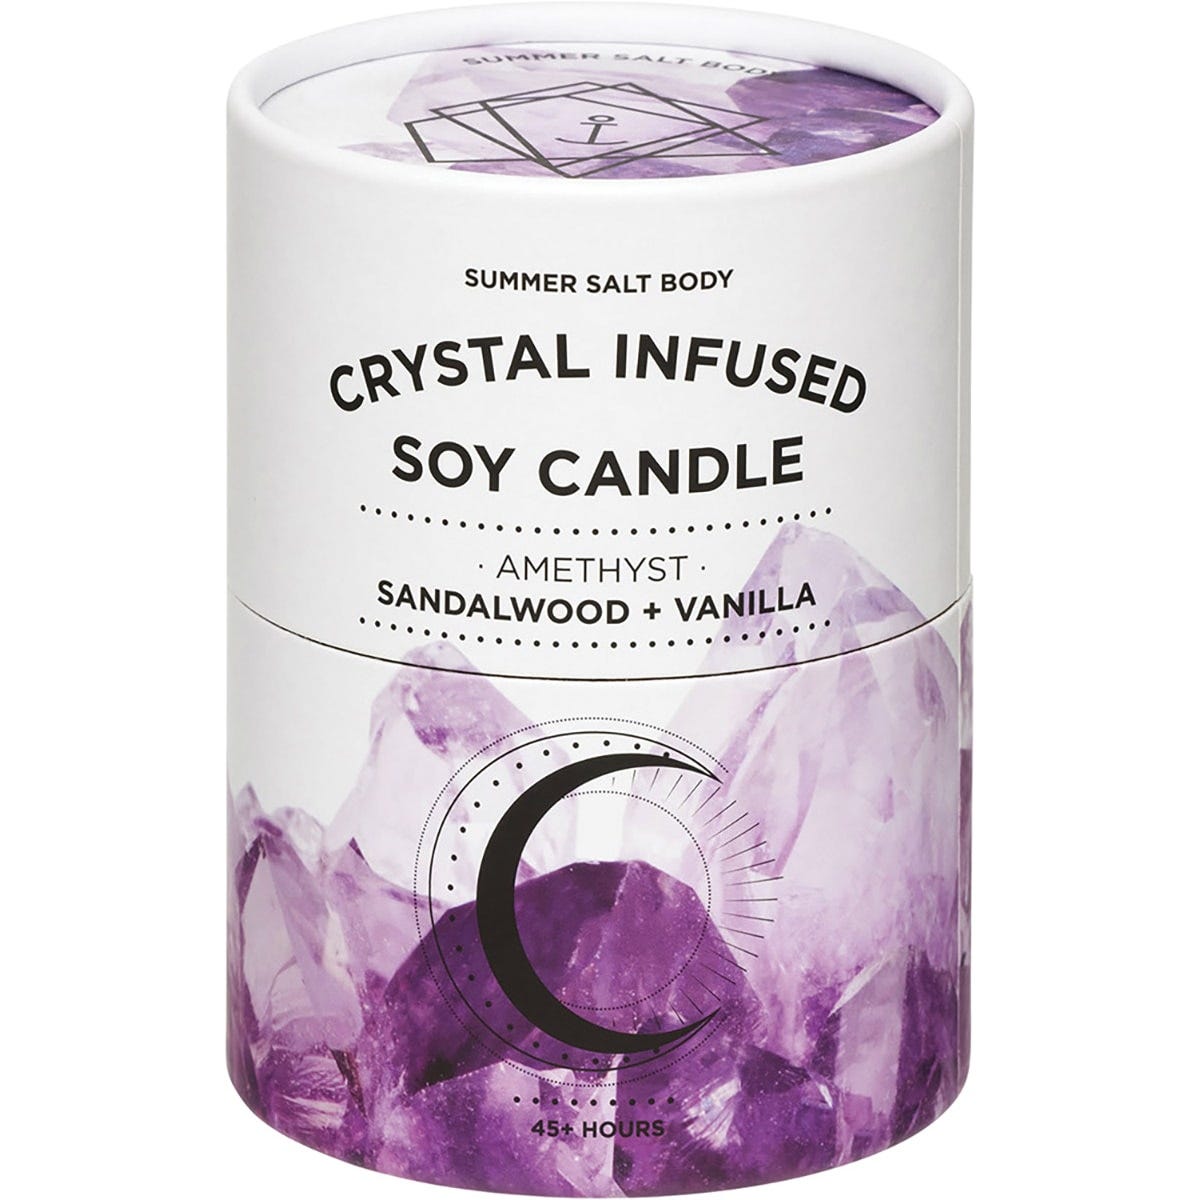 Summer Salt Body Crystal Infused Soy Candle Amethyst Sandalwood Vanilla